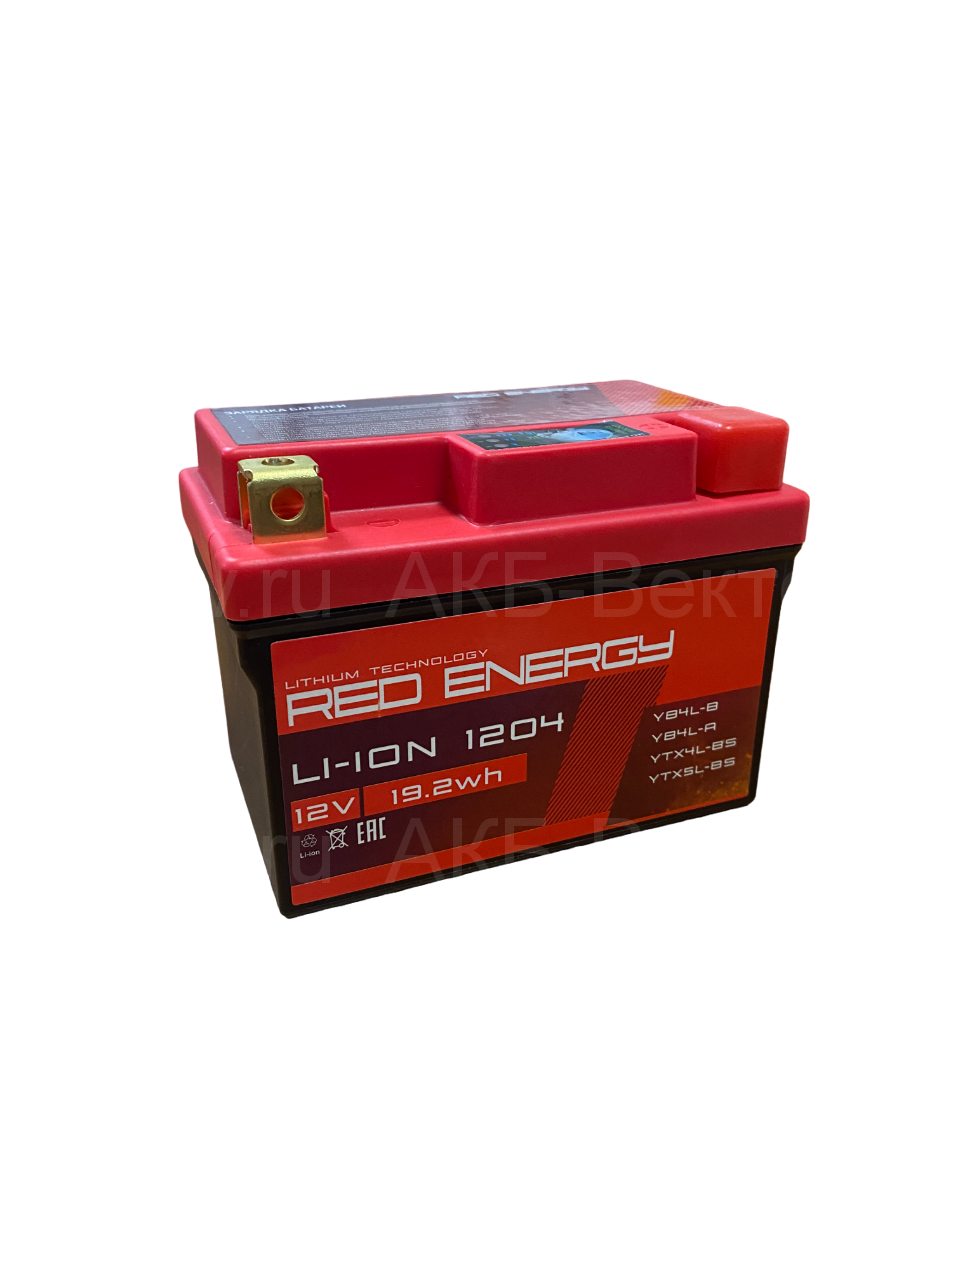 АКБ Red Energy Li-ion 1204 YTX4L-BS литиевый